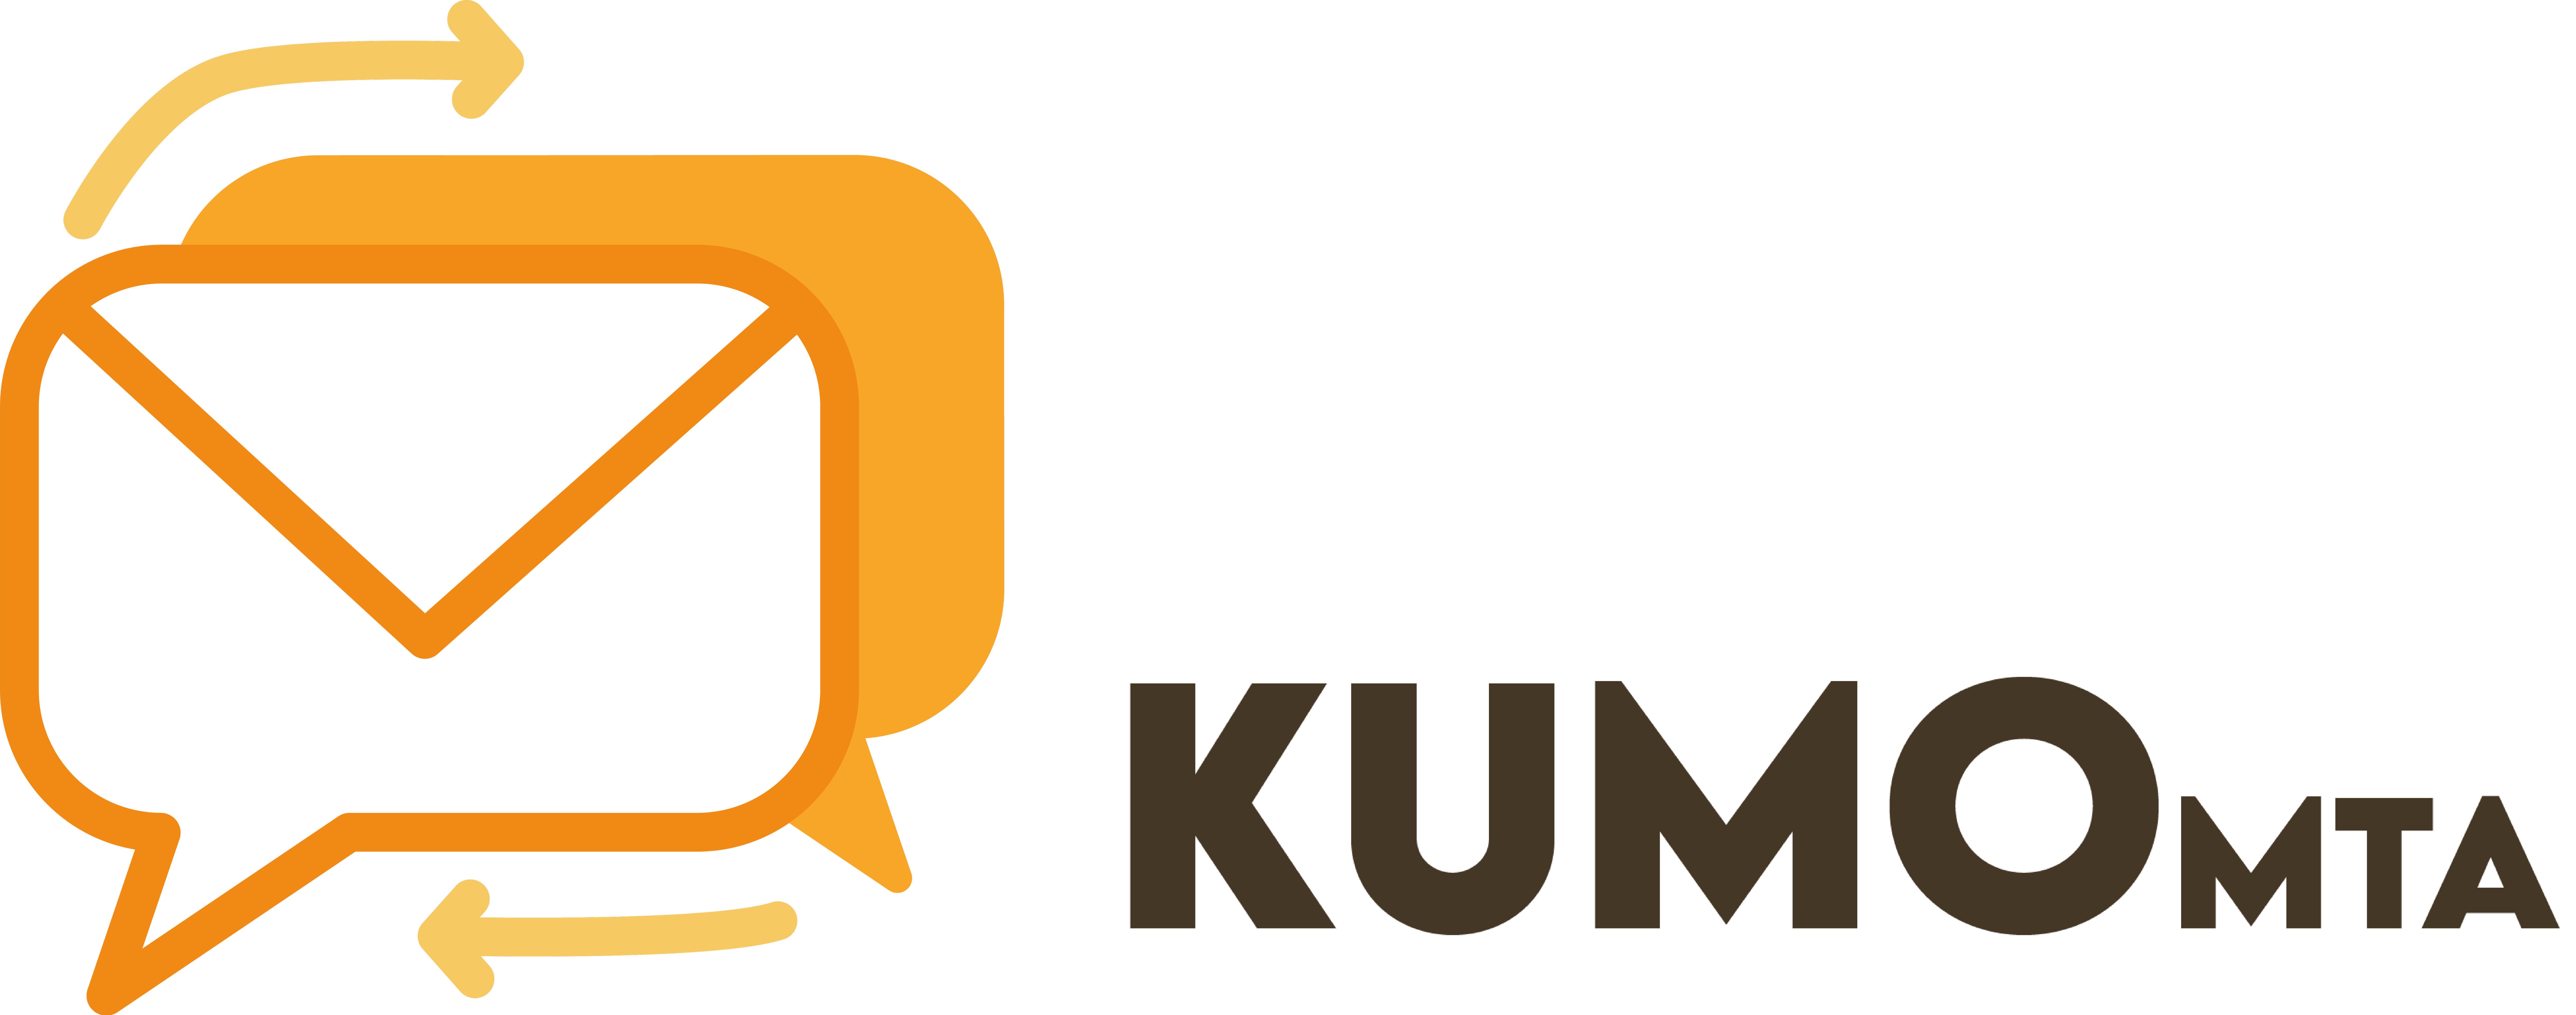 Logo plus KumoMTA Text